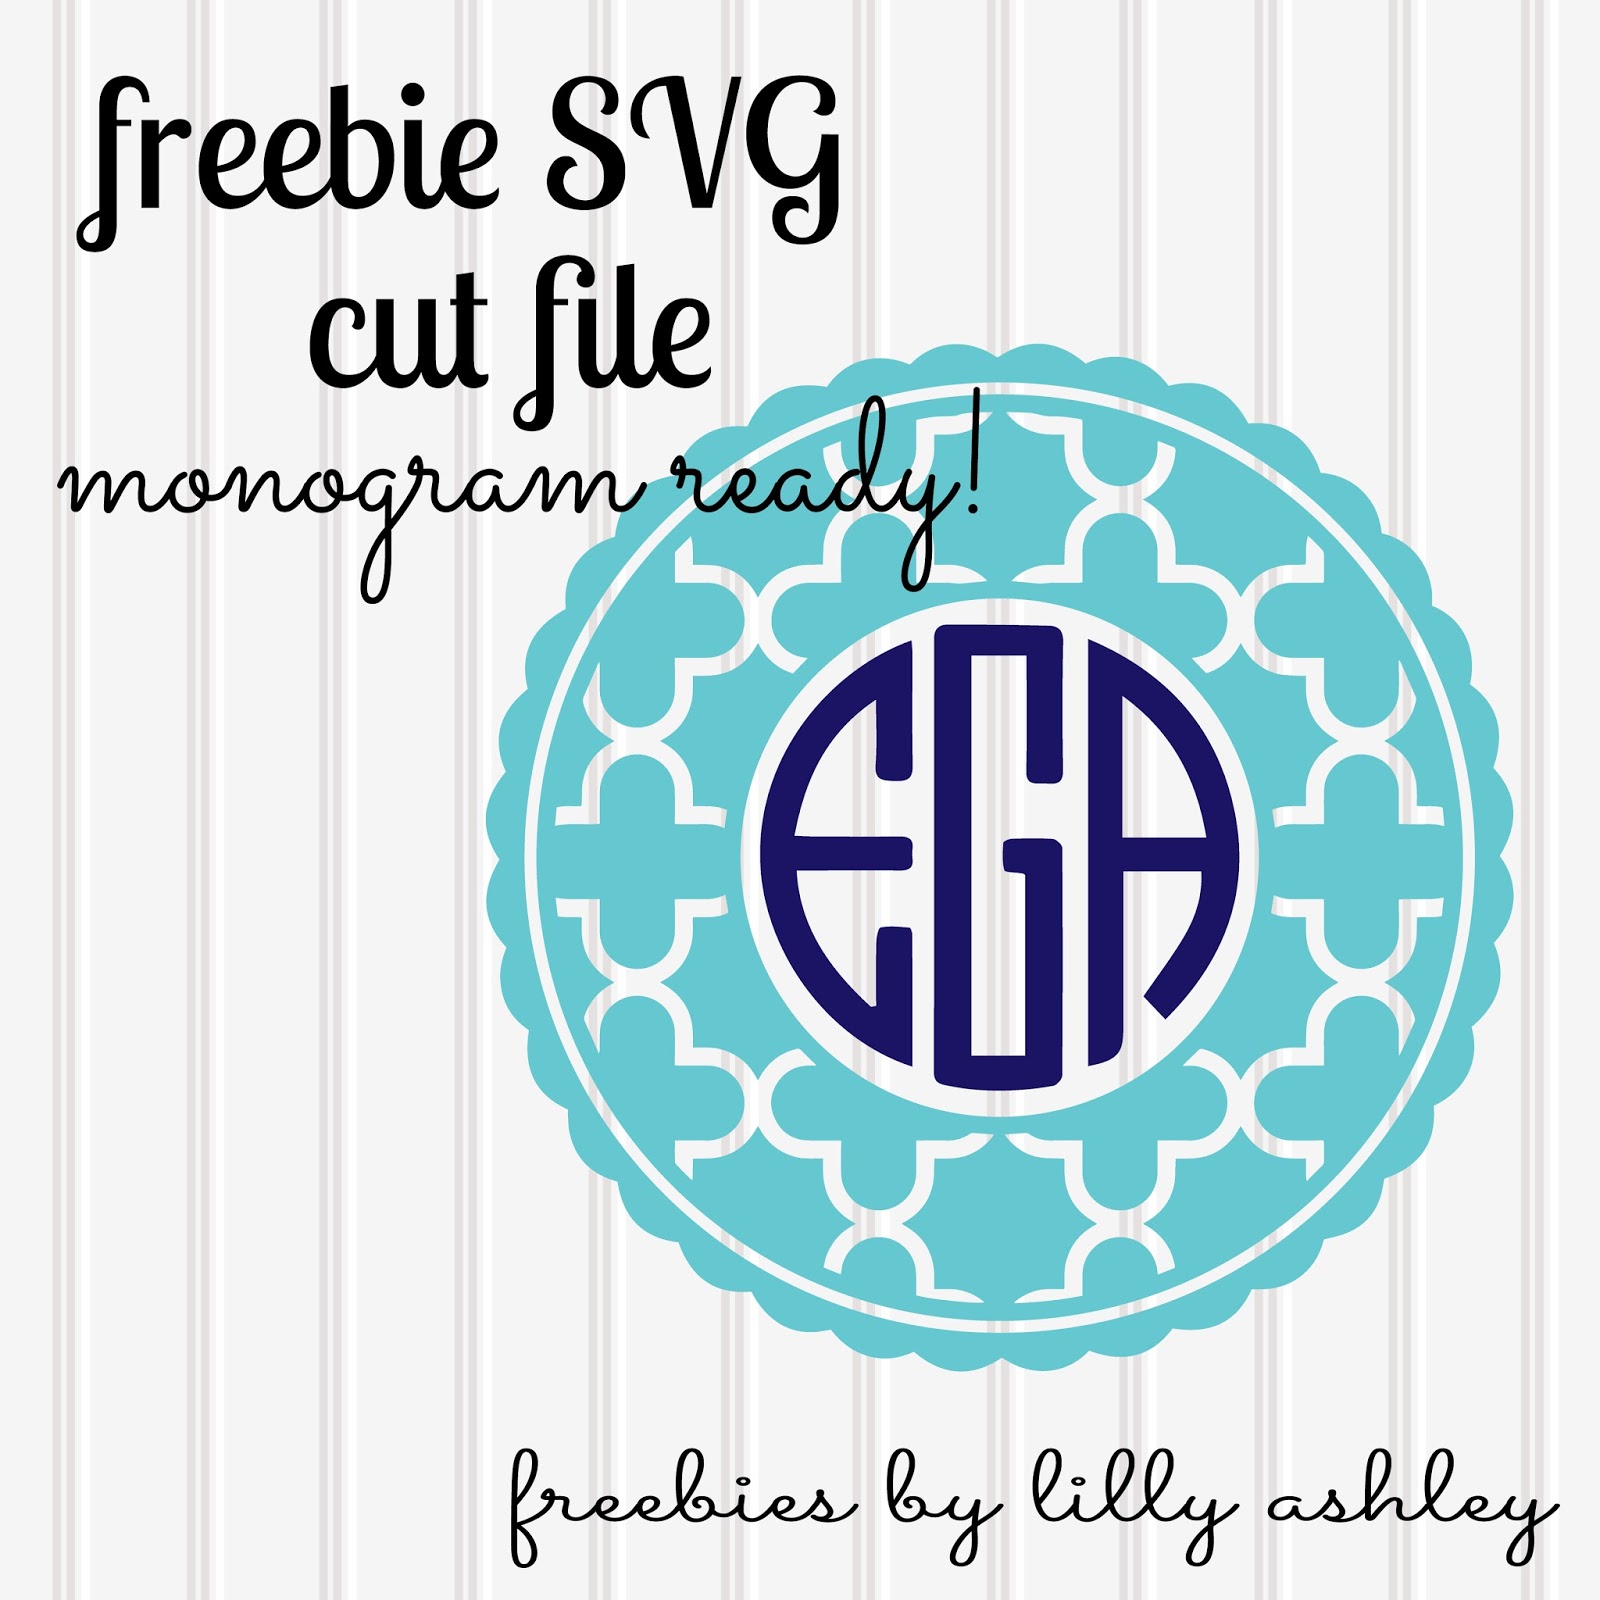 Free SVG File Monogram ready